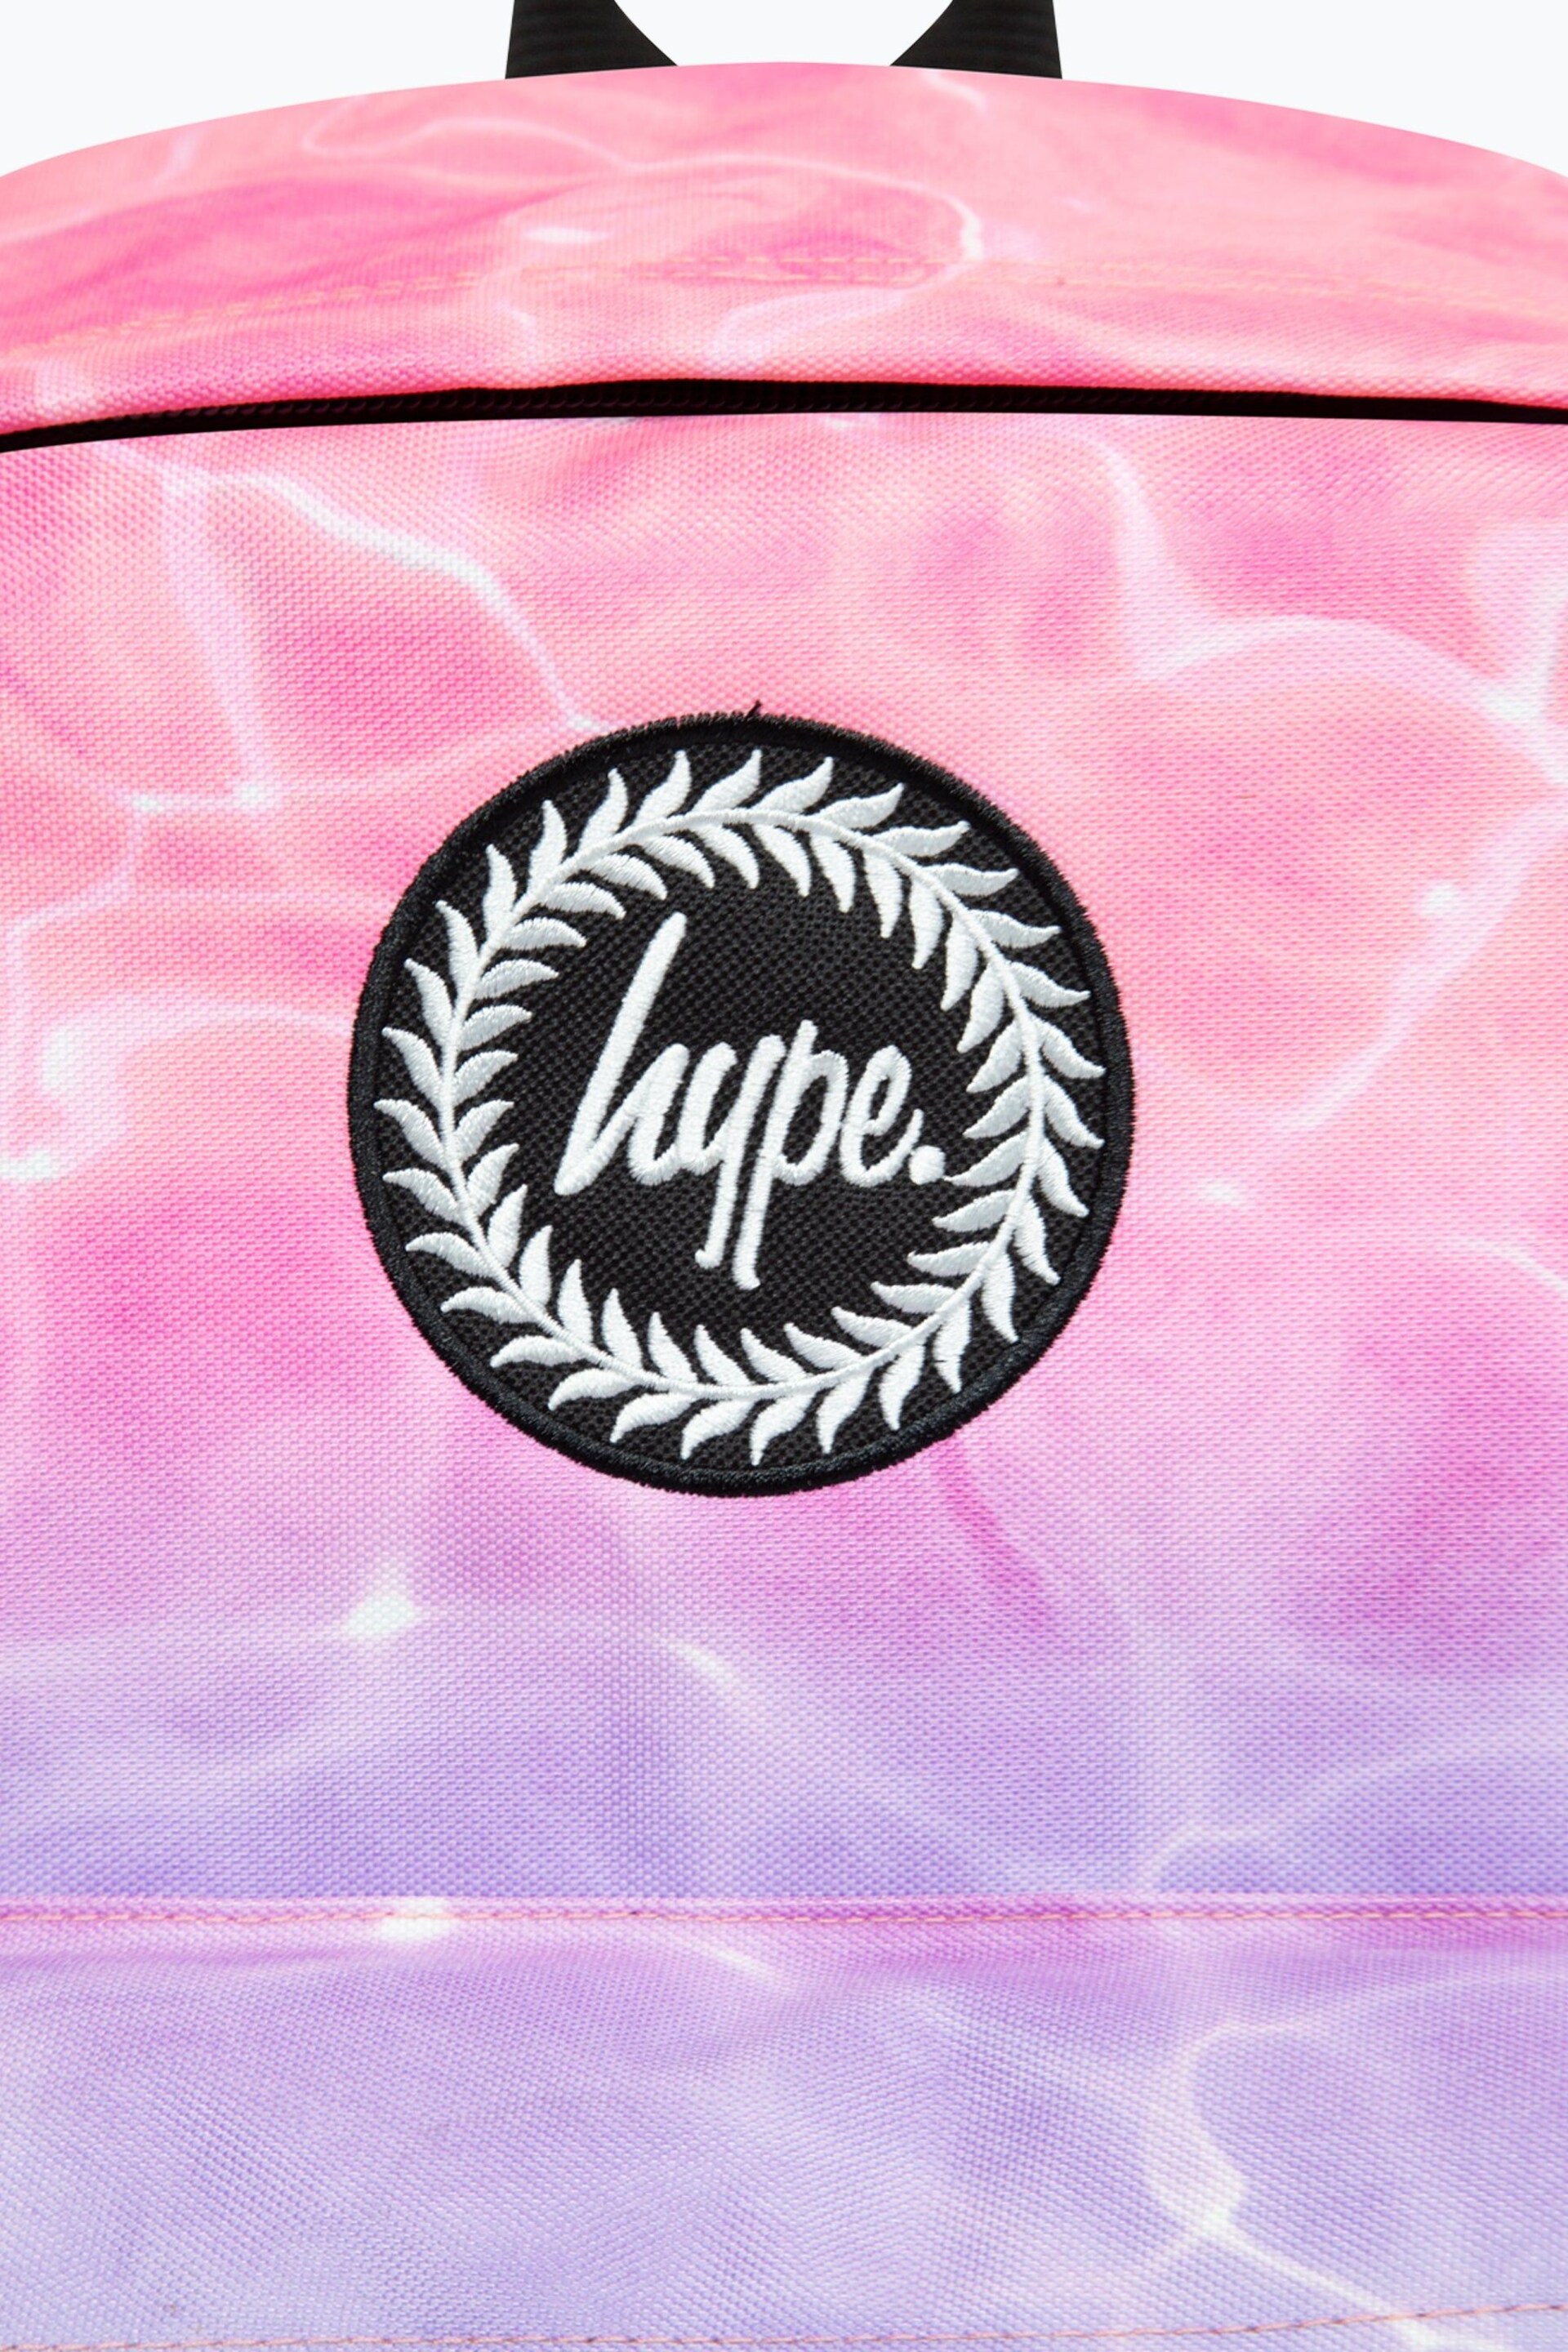 Hype. Multi Pastel Pool Badge Backpack - Image 3 of 6